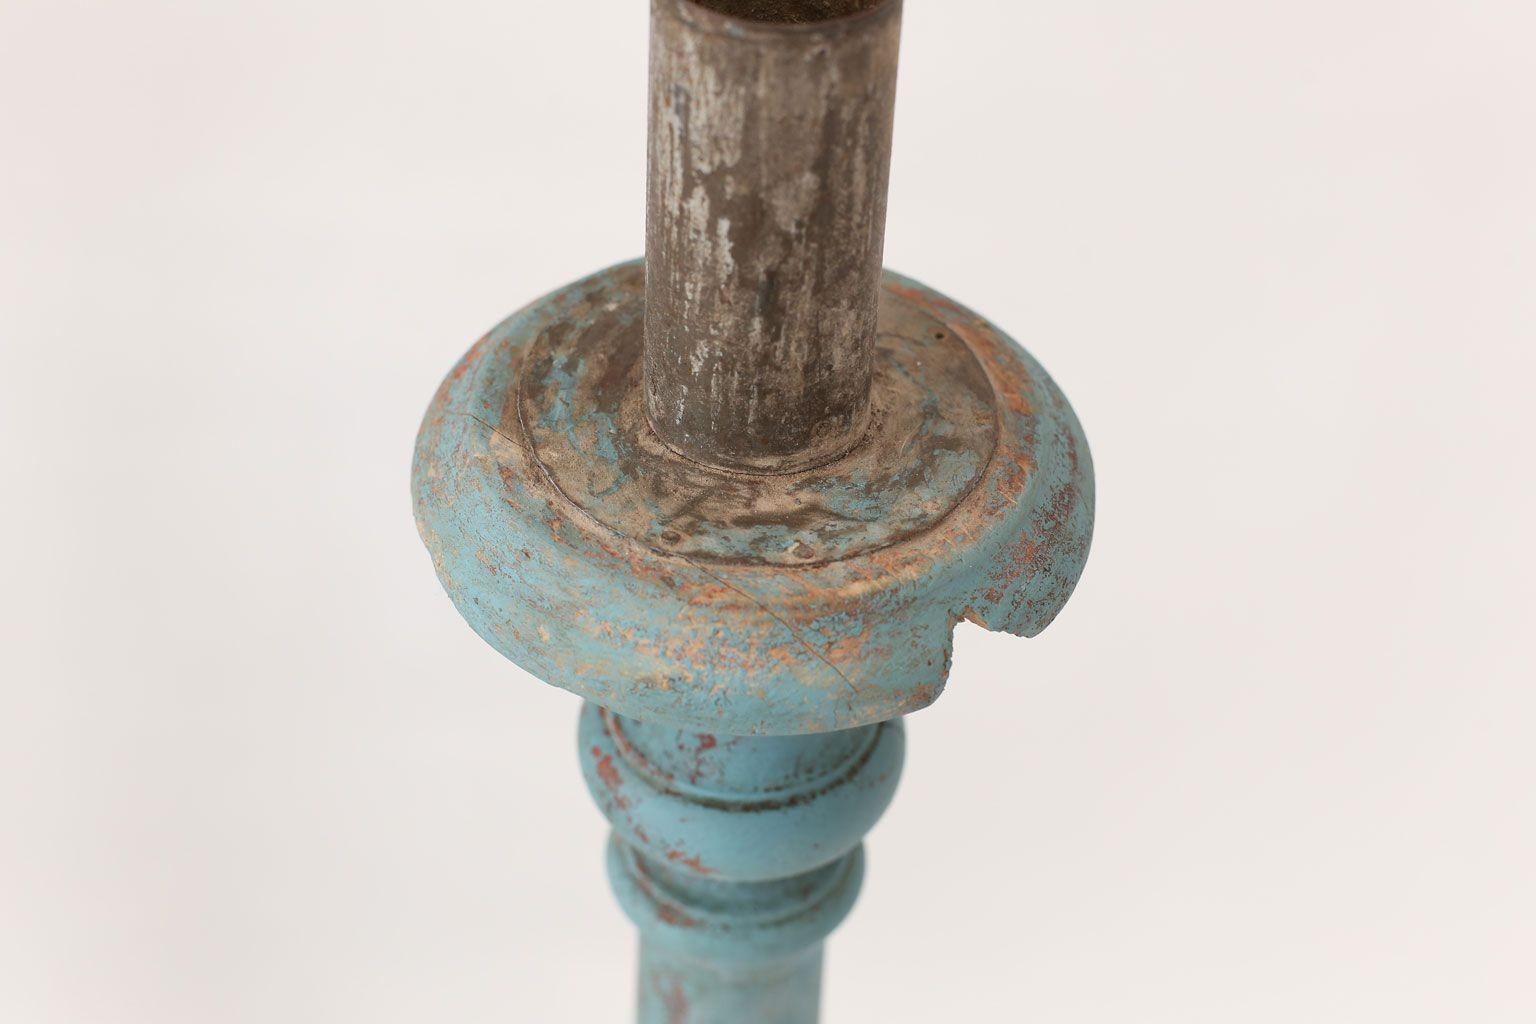 Vintage Teal-Blue Painted Candlestick 1